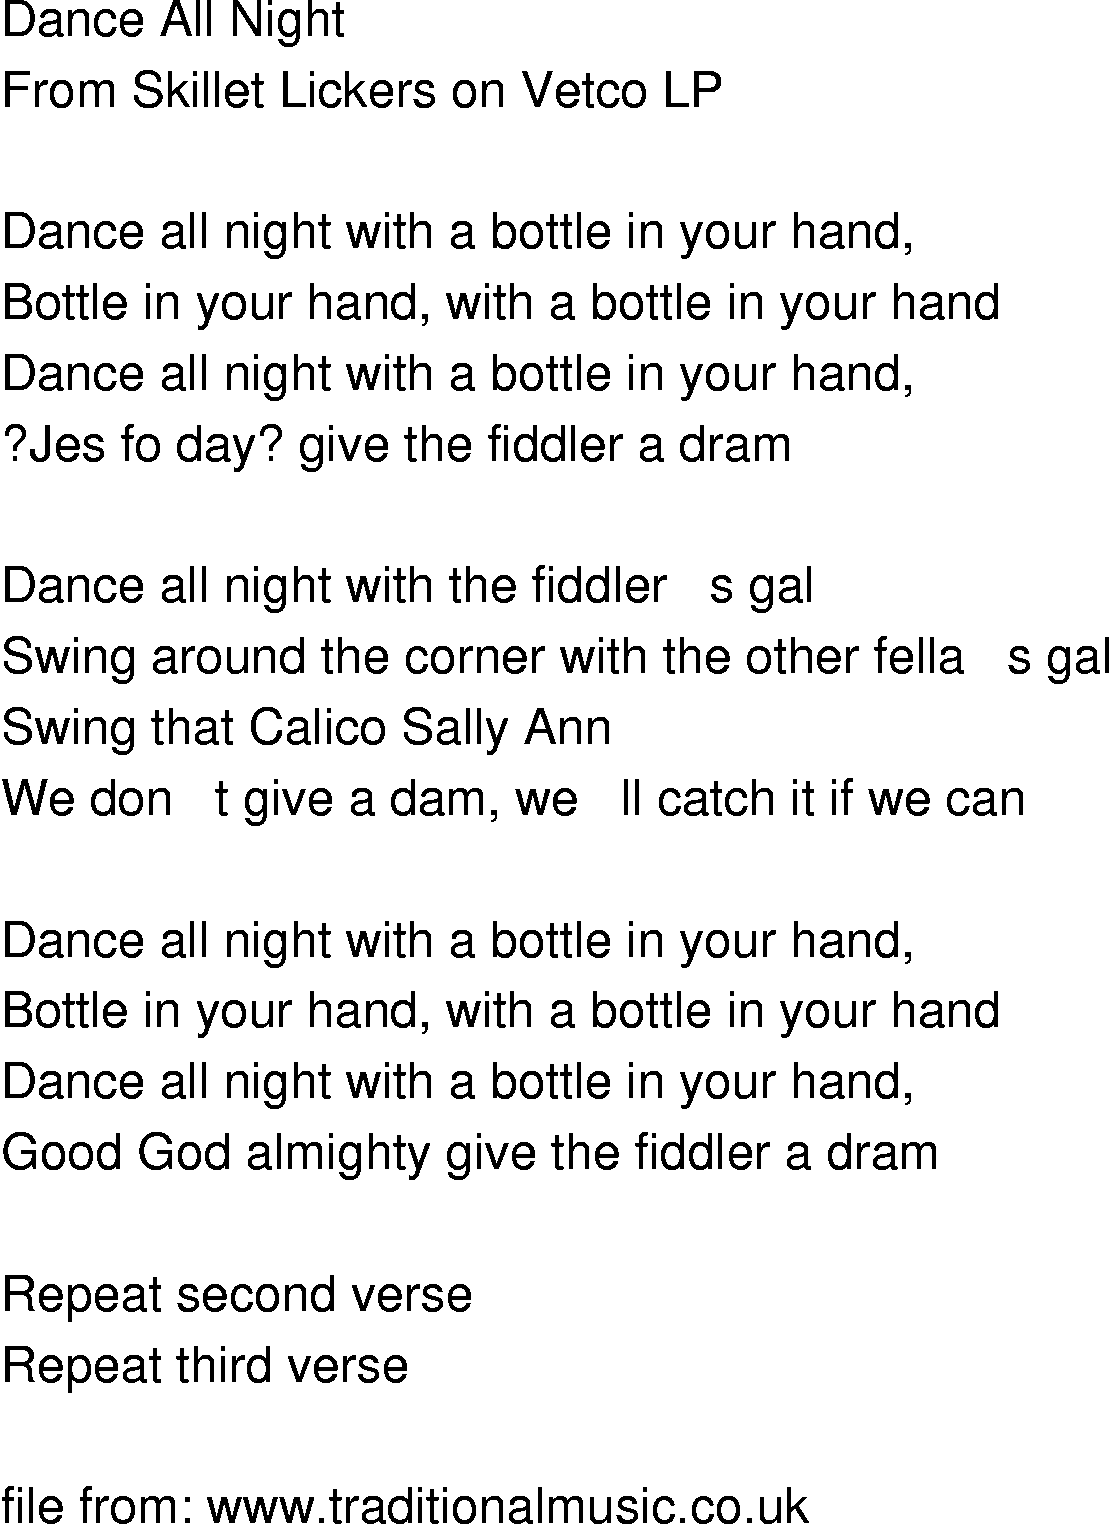 Old-Time (oldtimey) Song Lyrics - dance all night